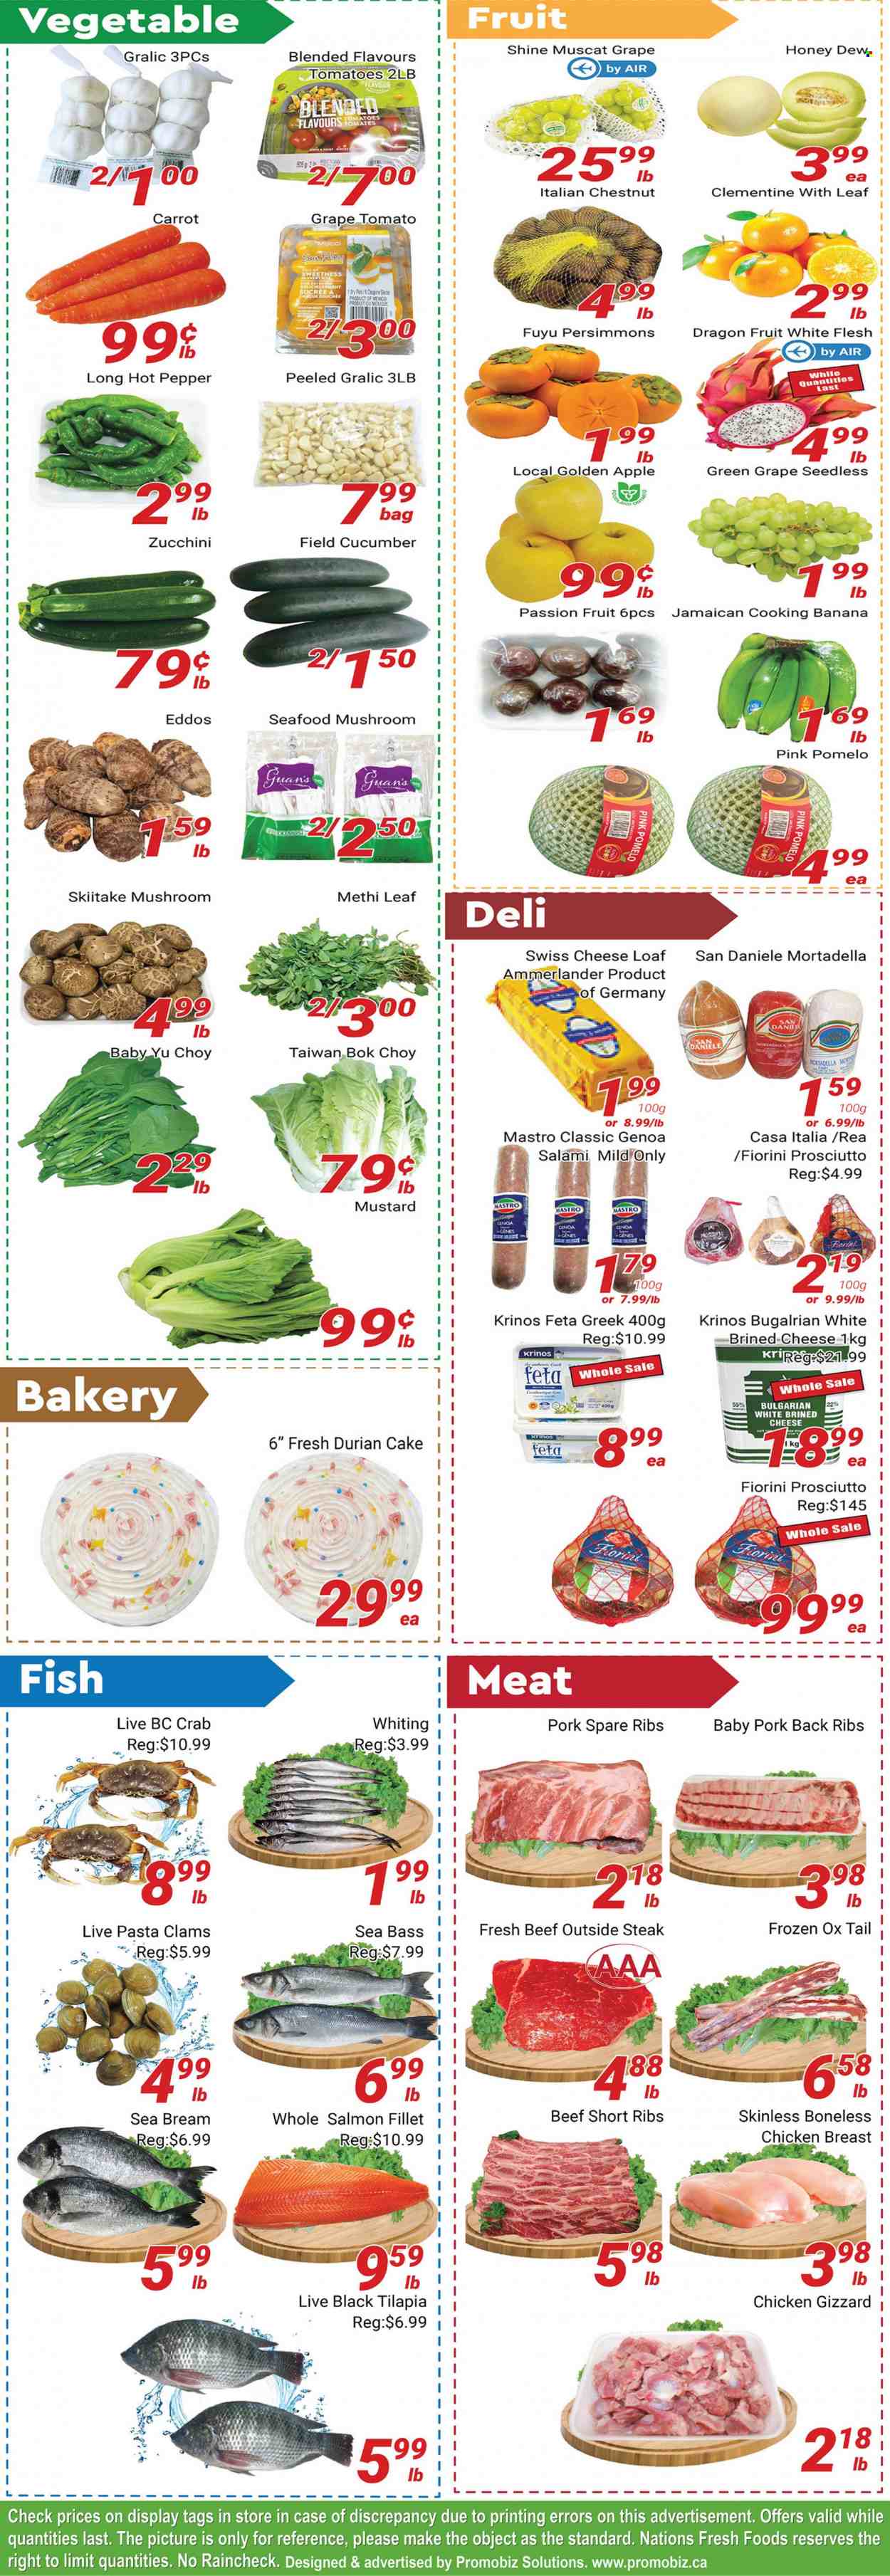 Nations Fresh Foods flyer  - November 25, 2022 - December 01, 2022.